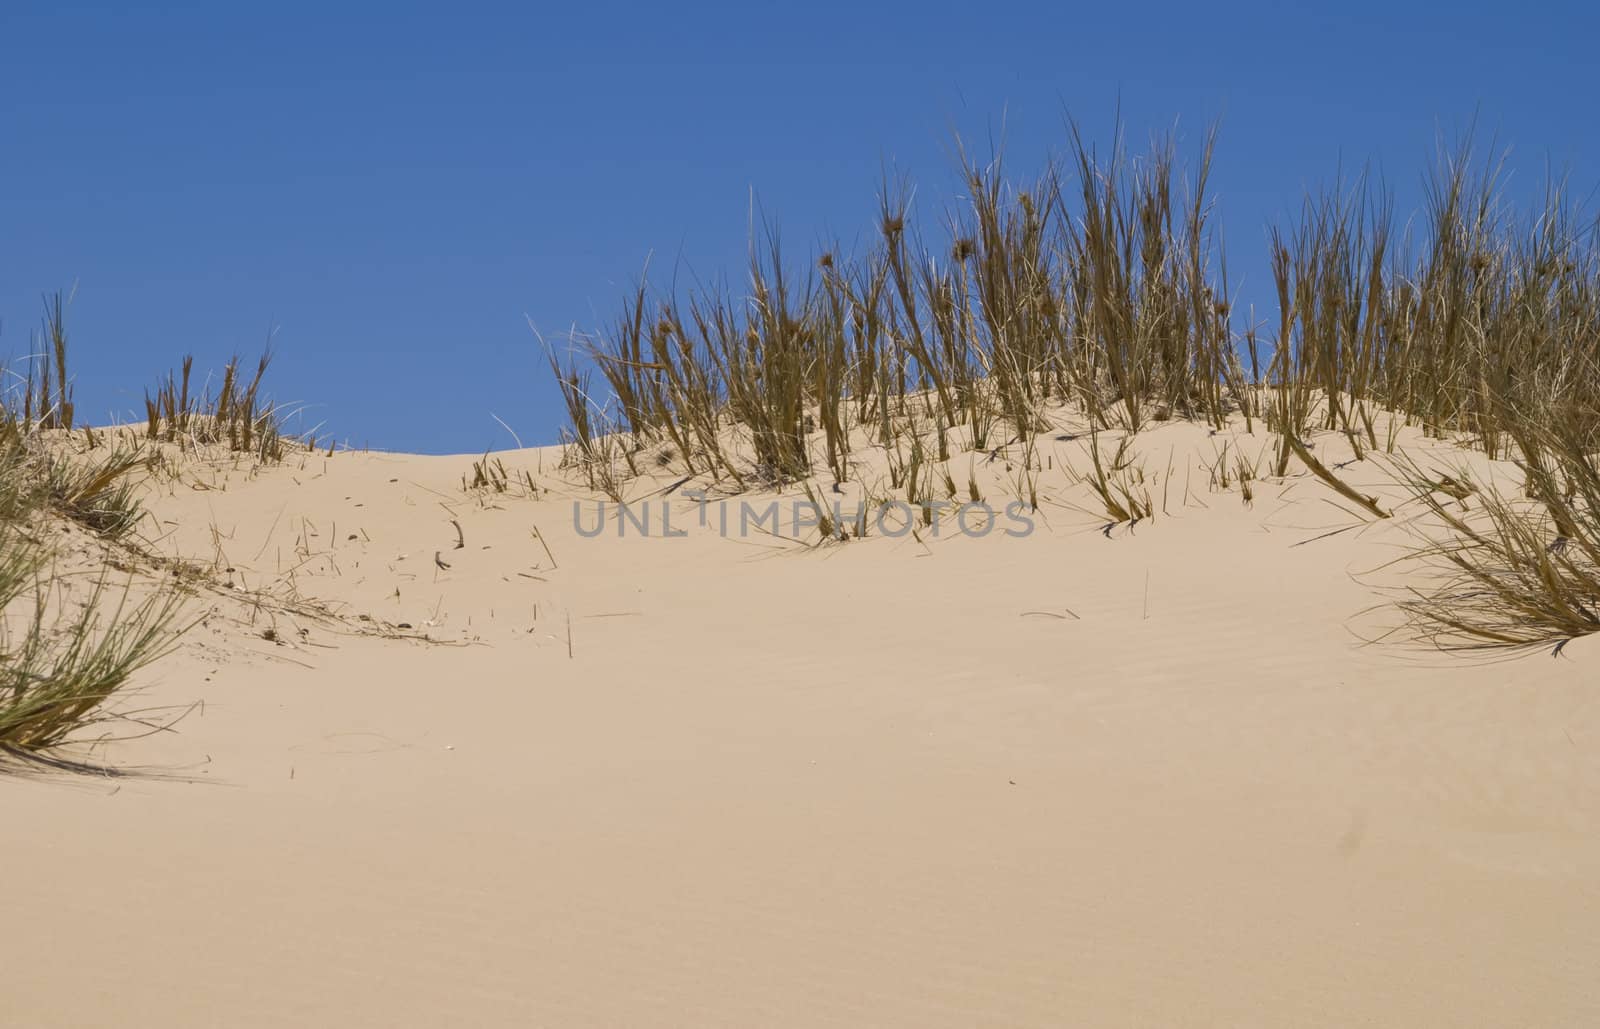 Virgin dunes. by Claudine